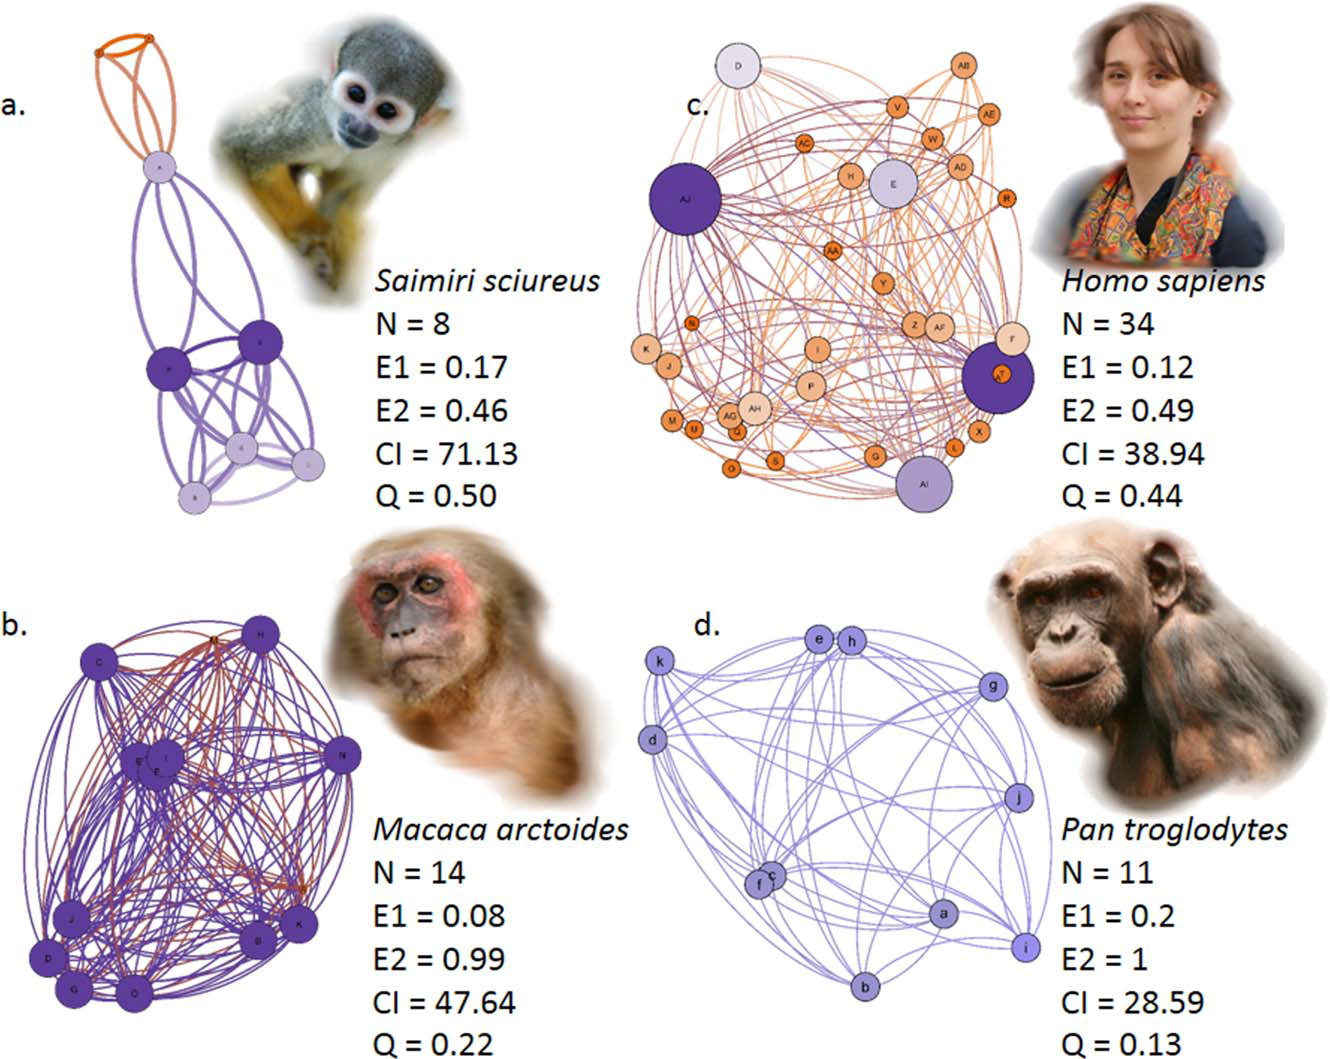 Network of different species